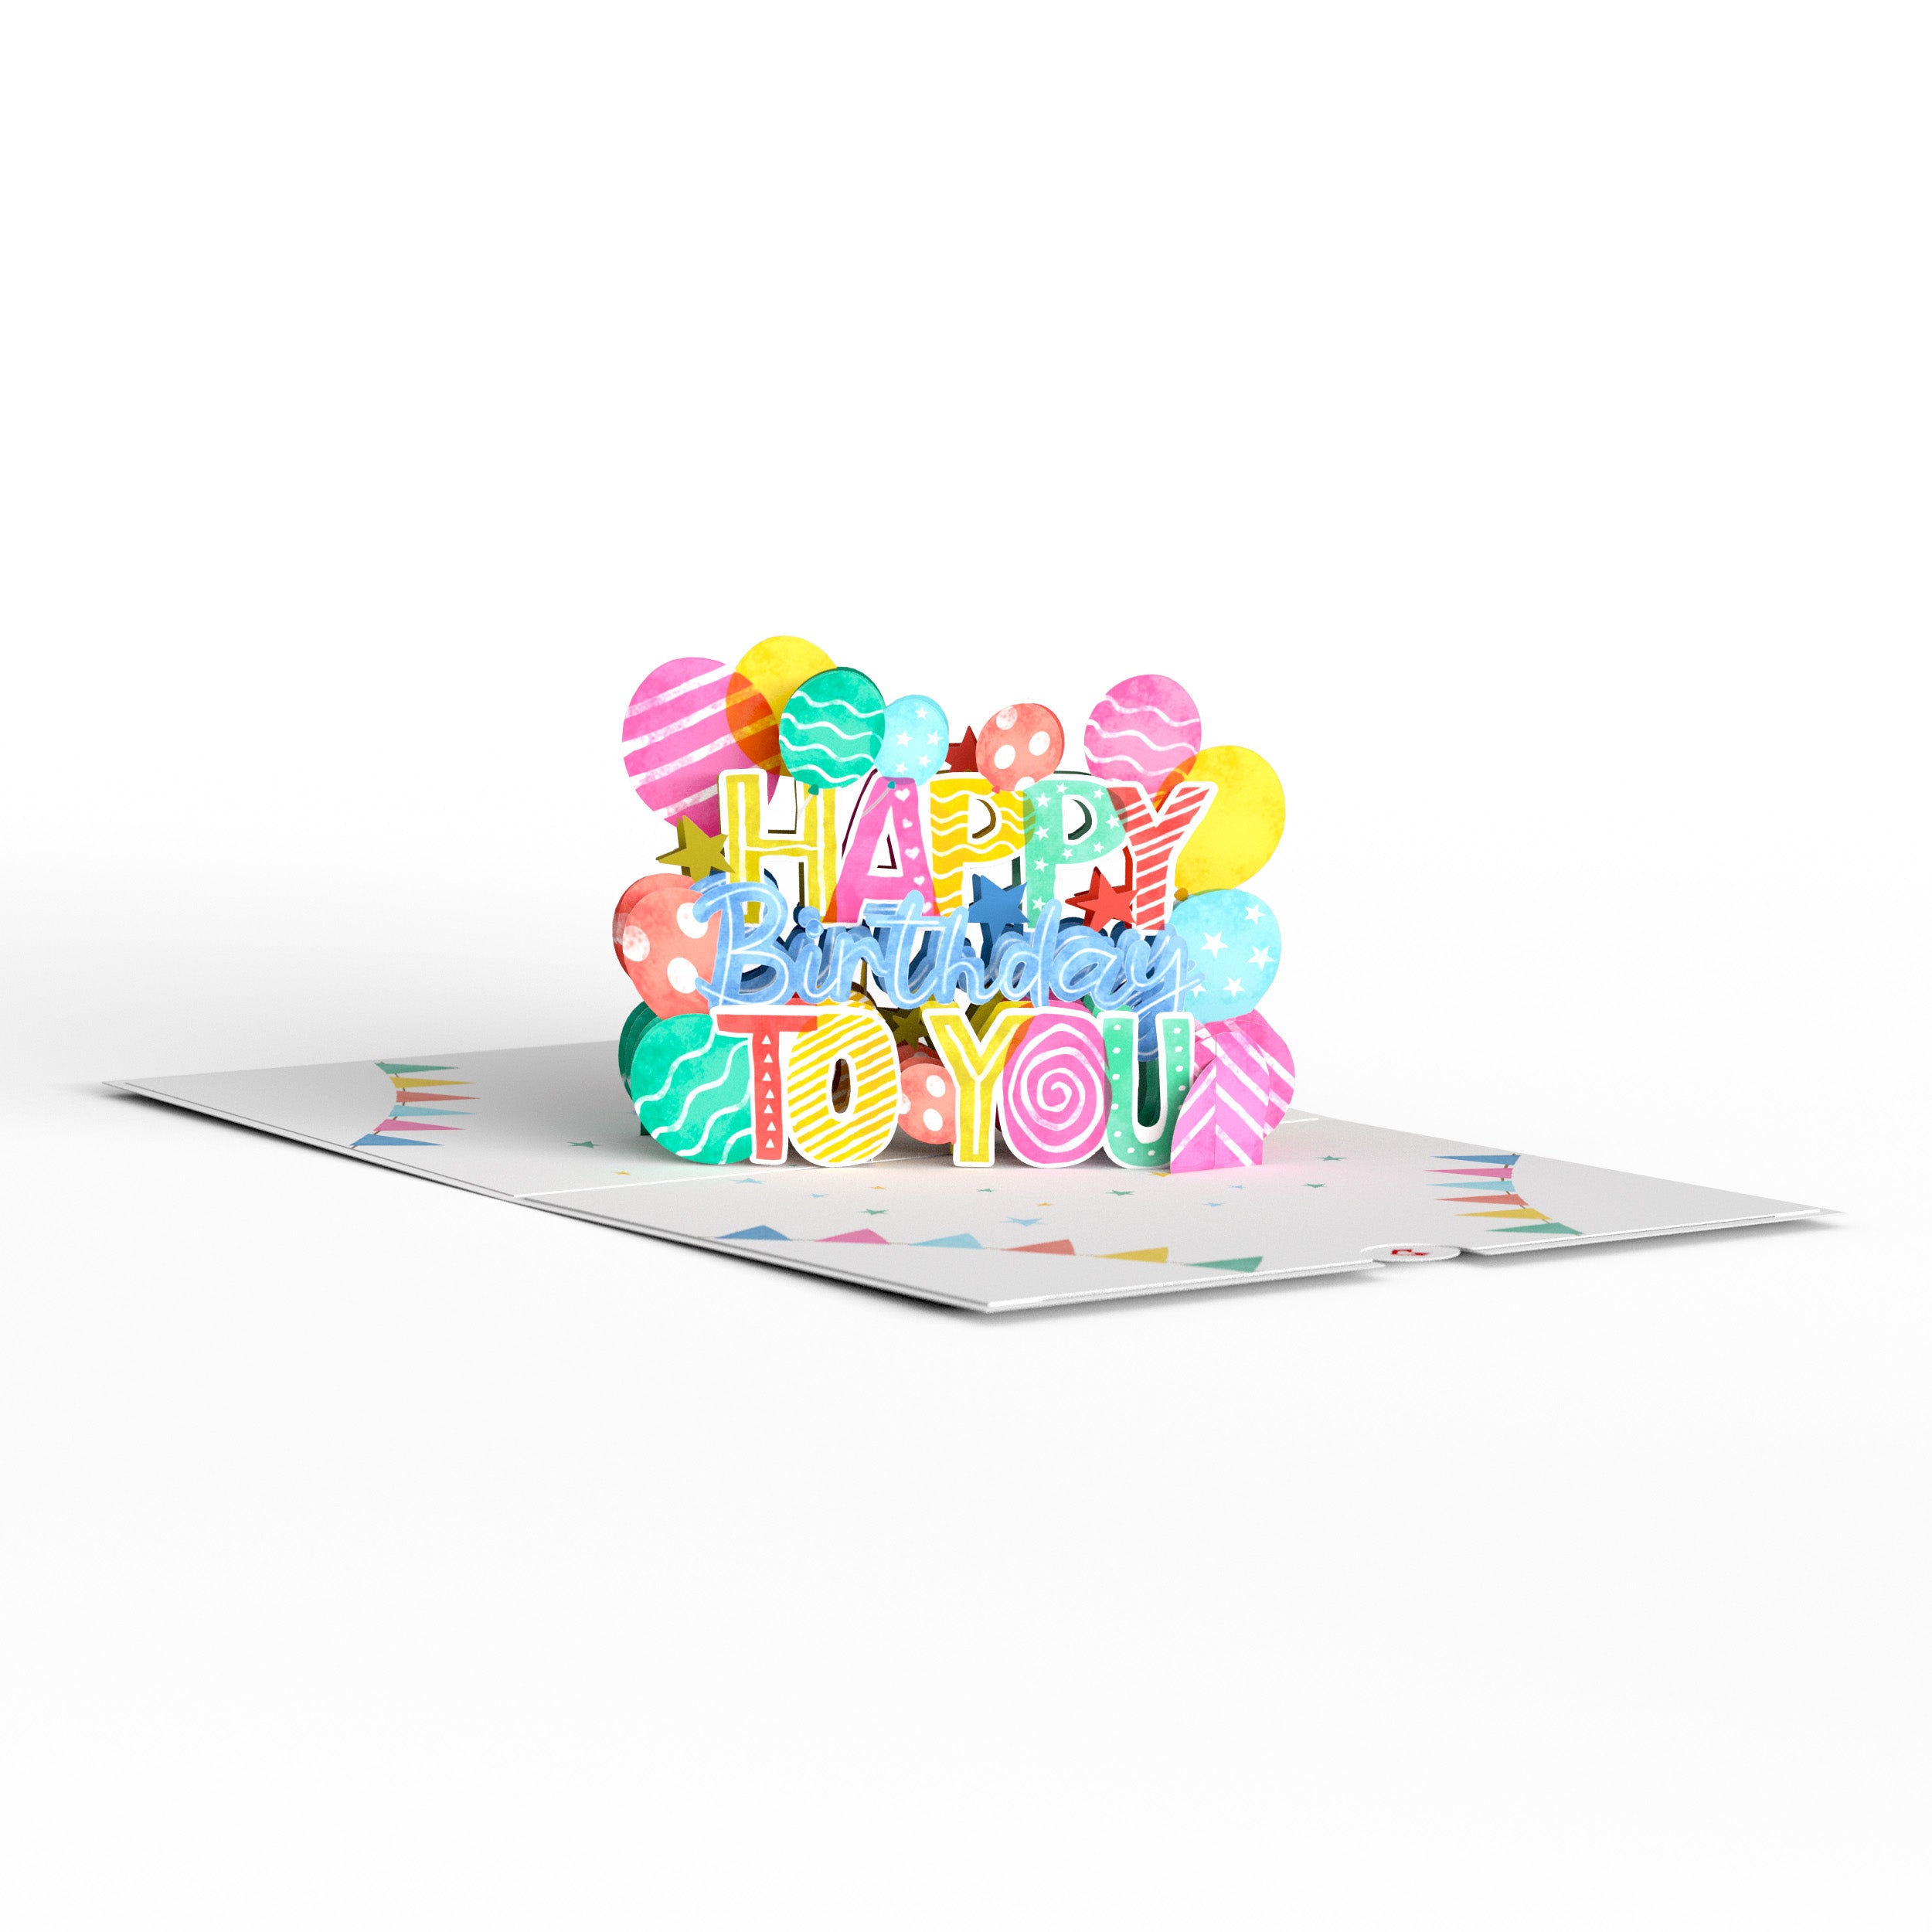 Let's Celebrate Birthday Pop-Up Card – Lovepop